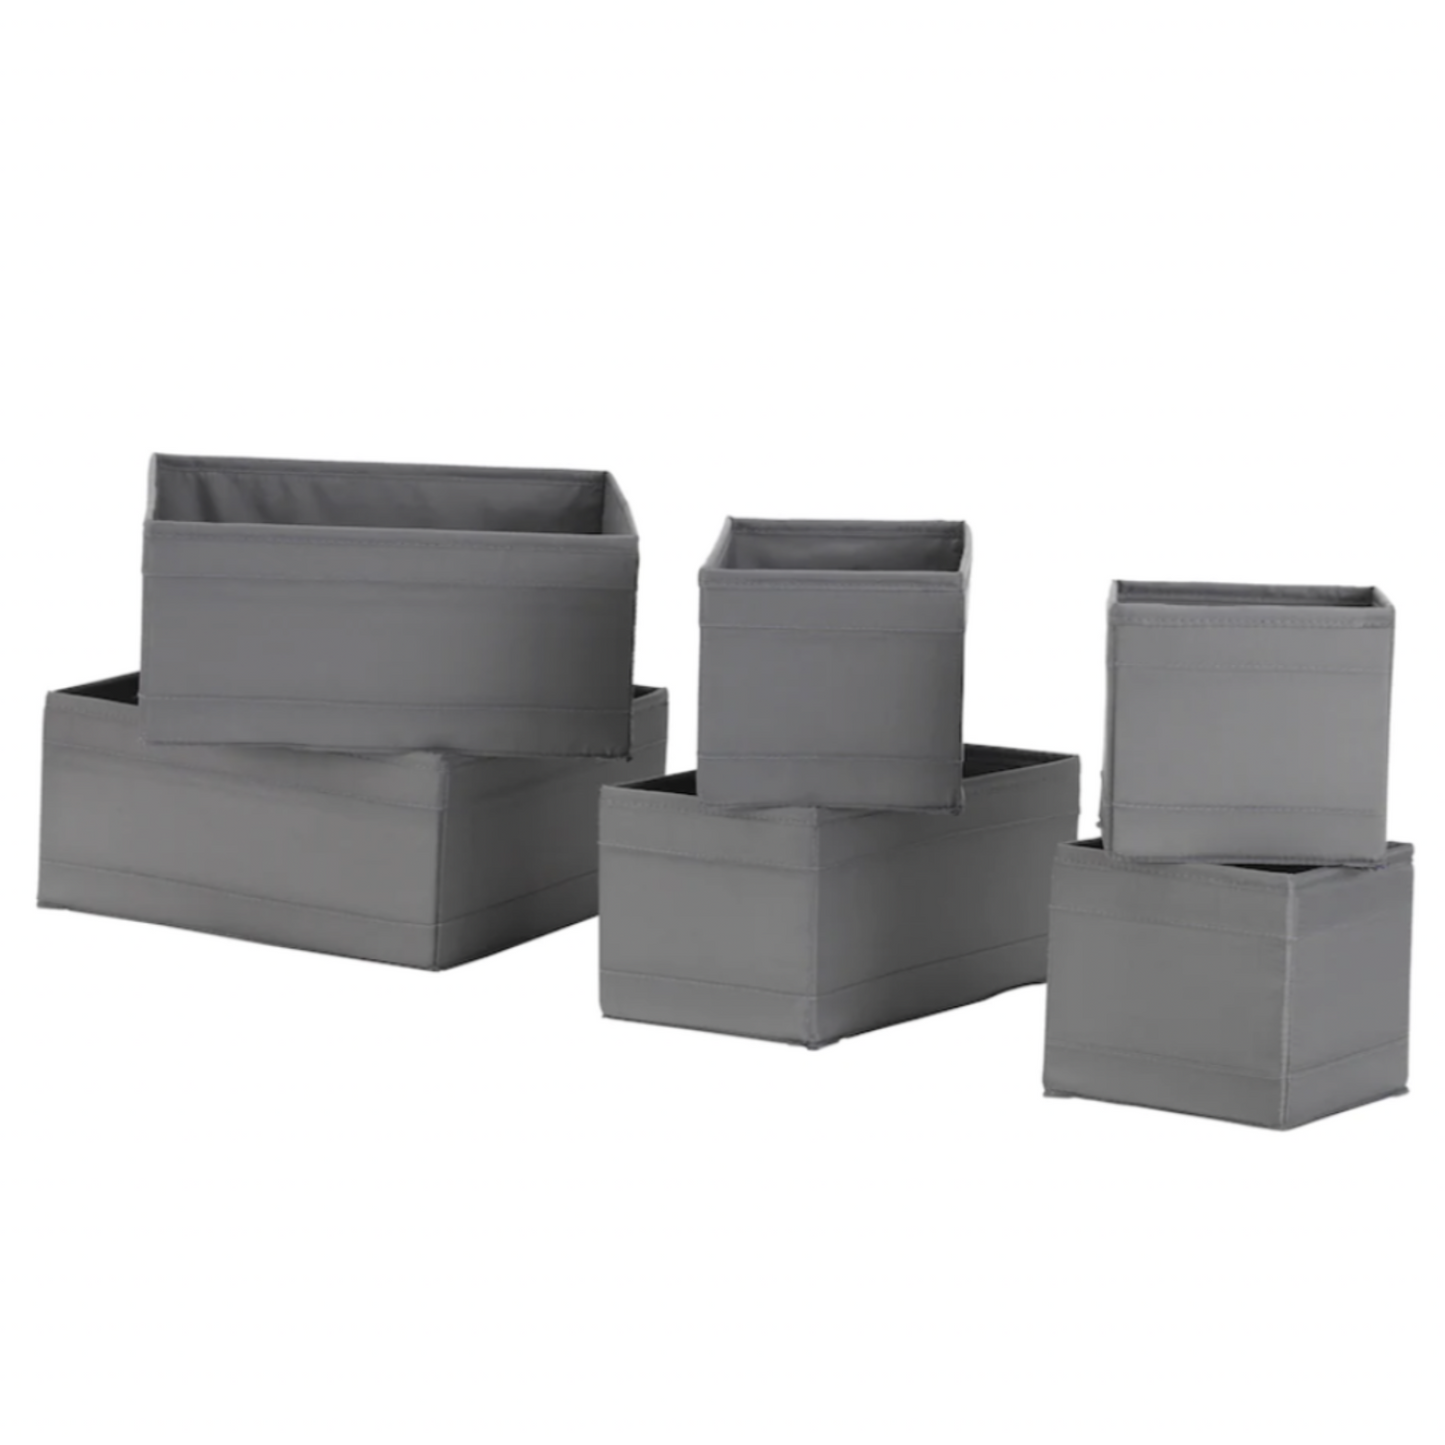 Ikea Skubb Drawer Organiser Boxes, Set of 6 (5818984133)